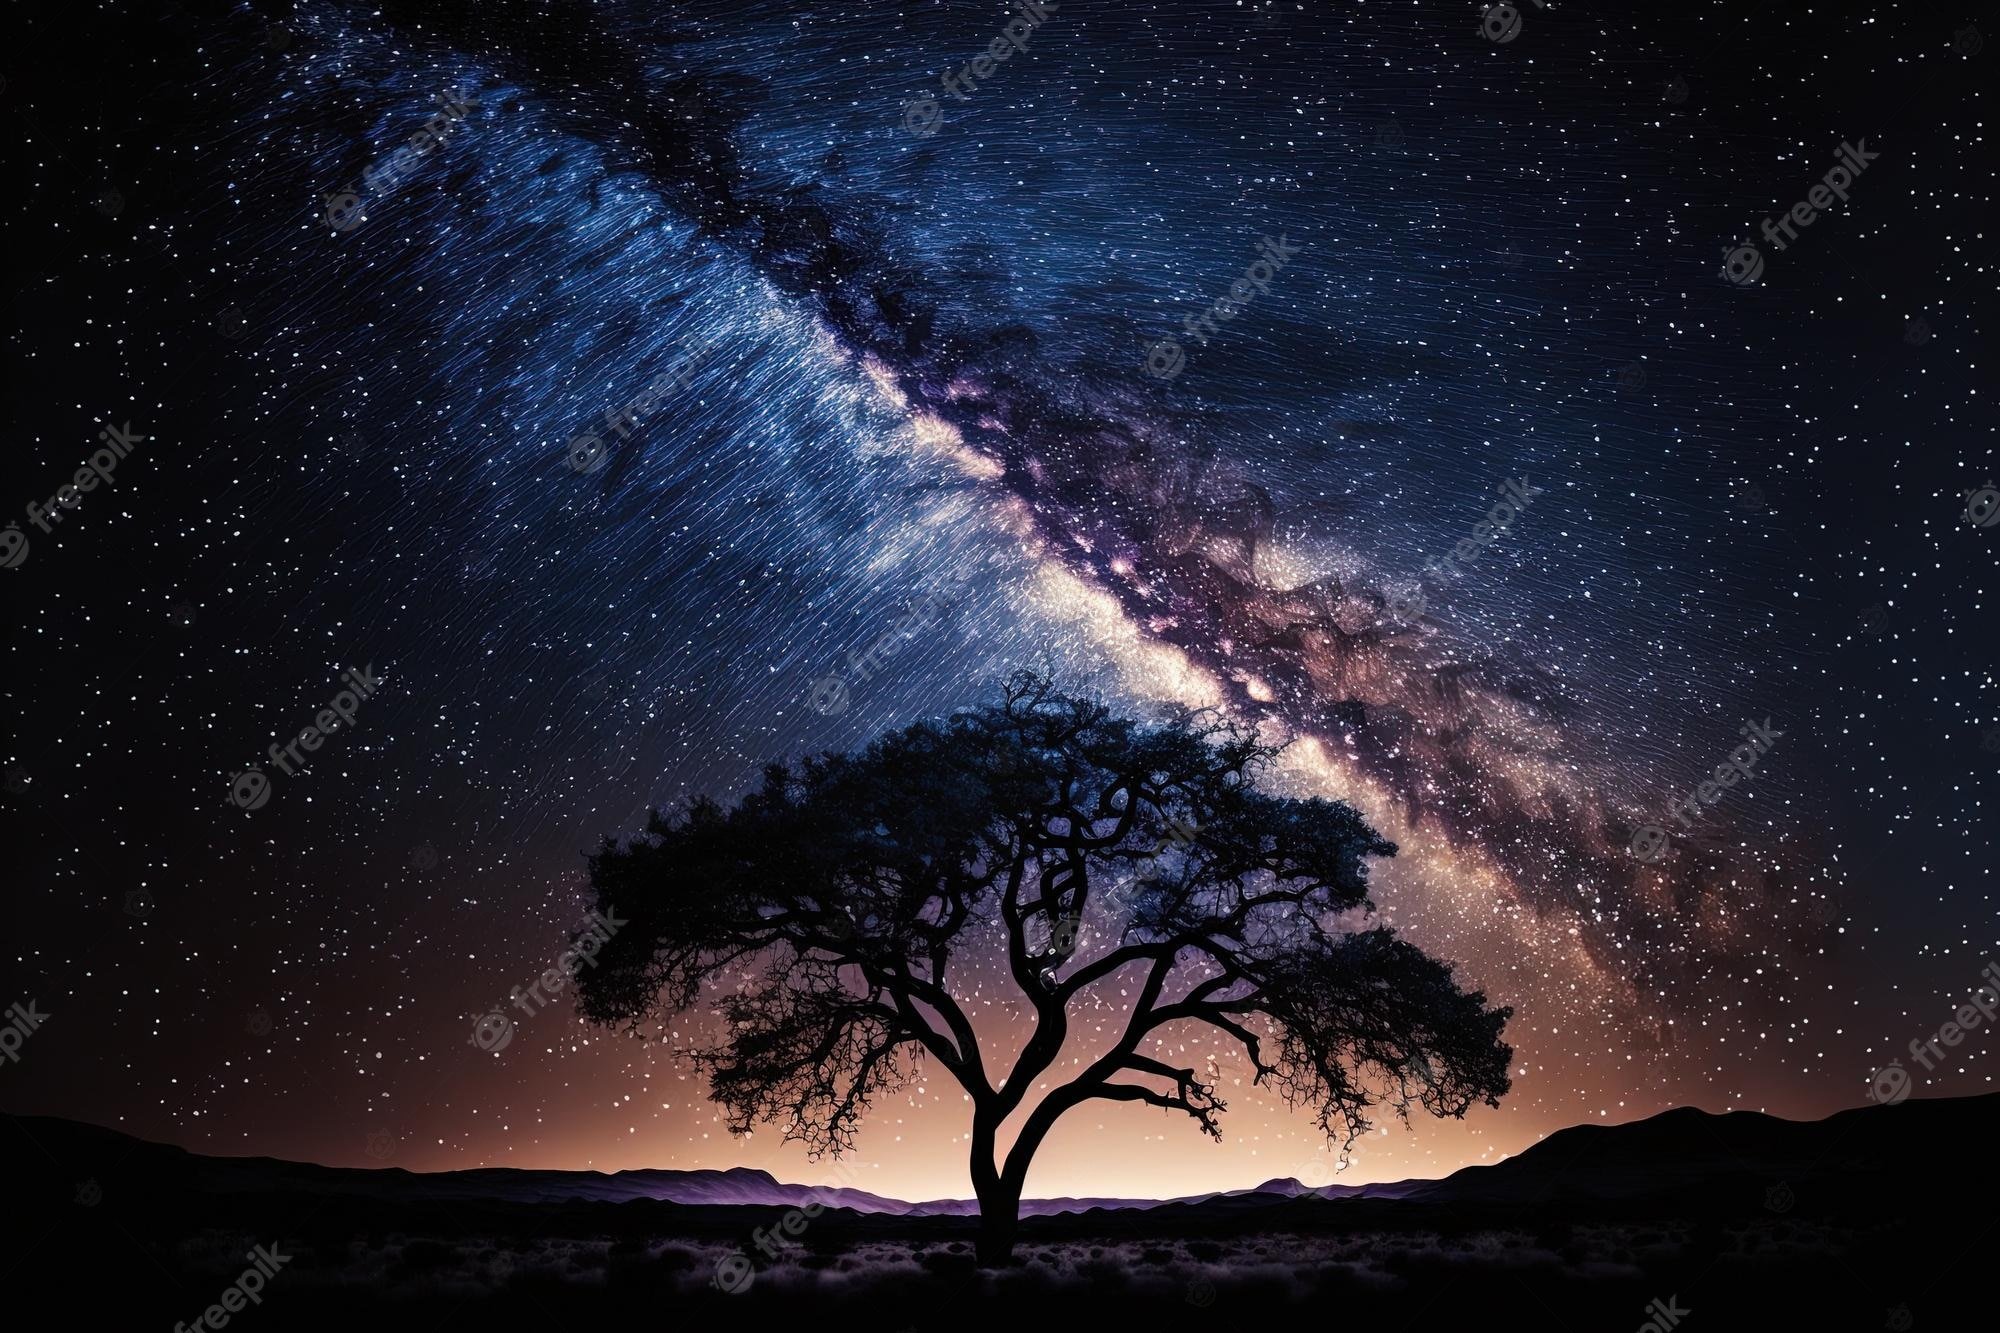 Galaxy Tree Image